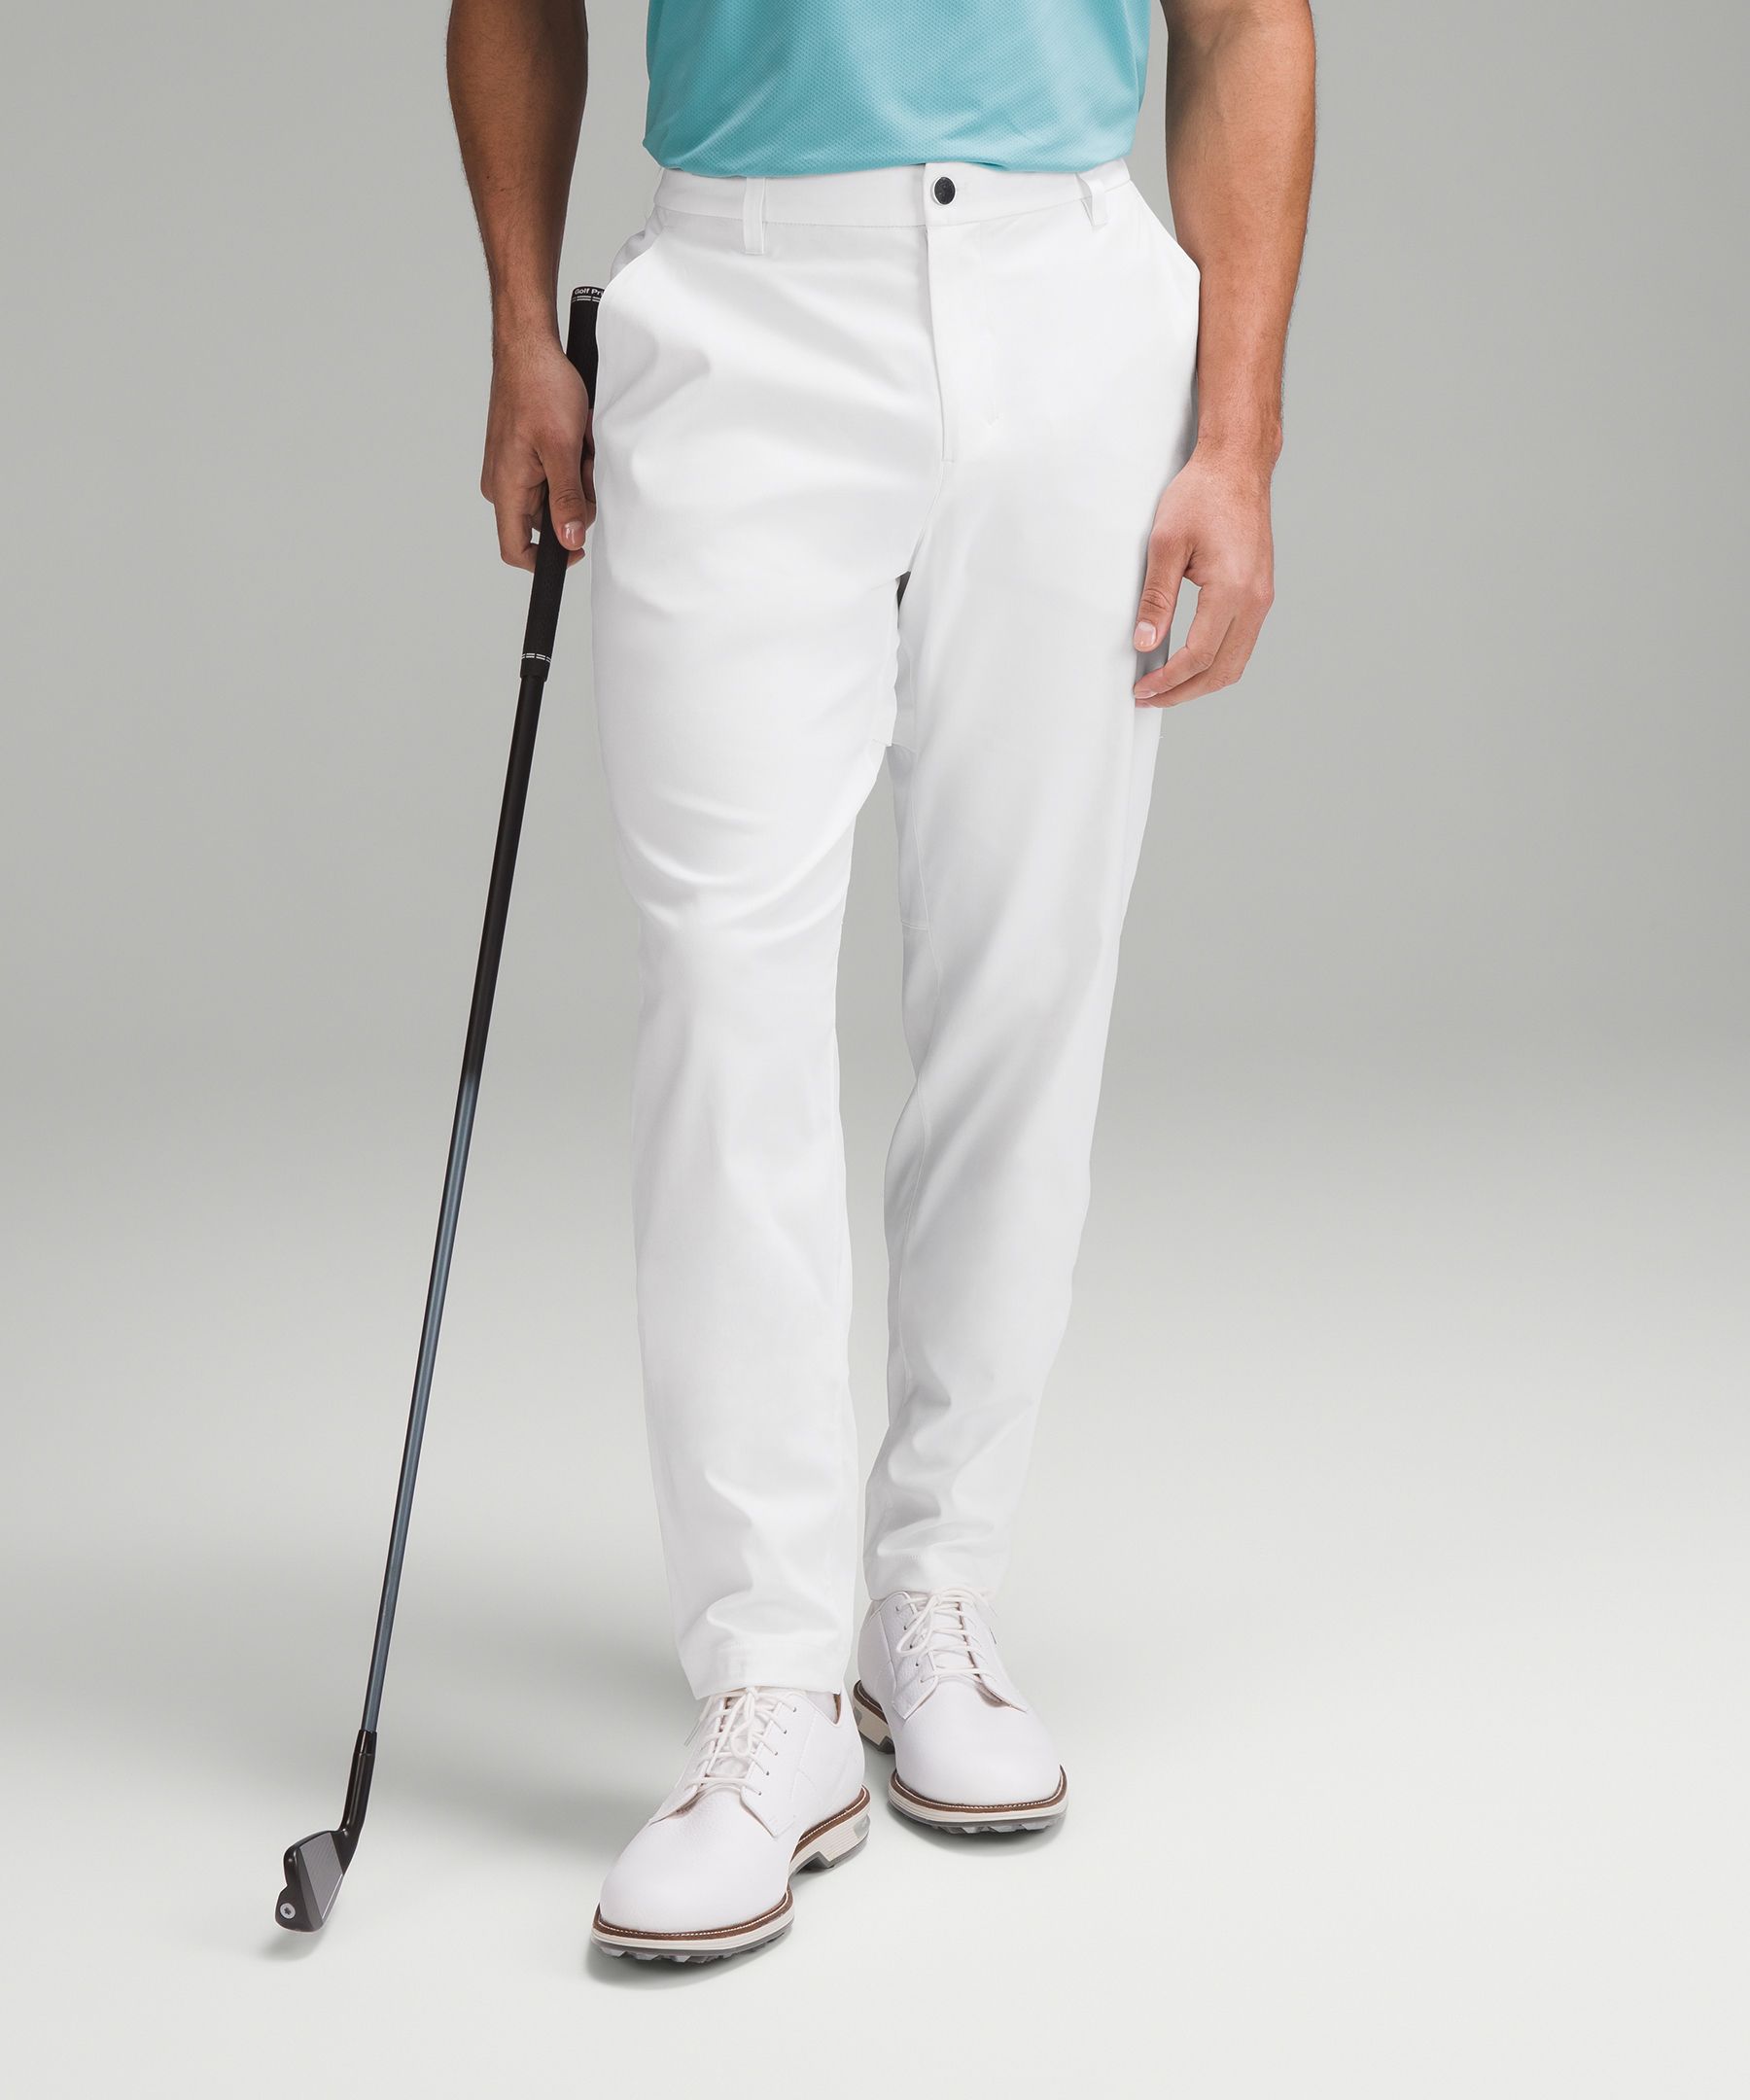 Lululemon Men's 32x33 Blue Stretch Nylon Classic Fit Tapered Leg Golf Pant